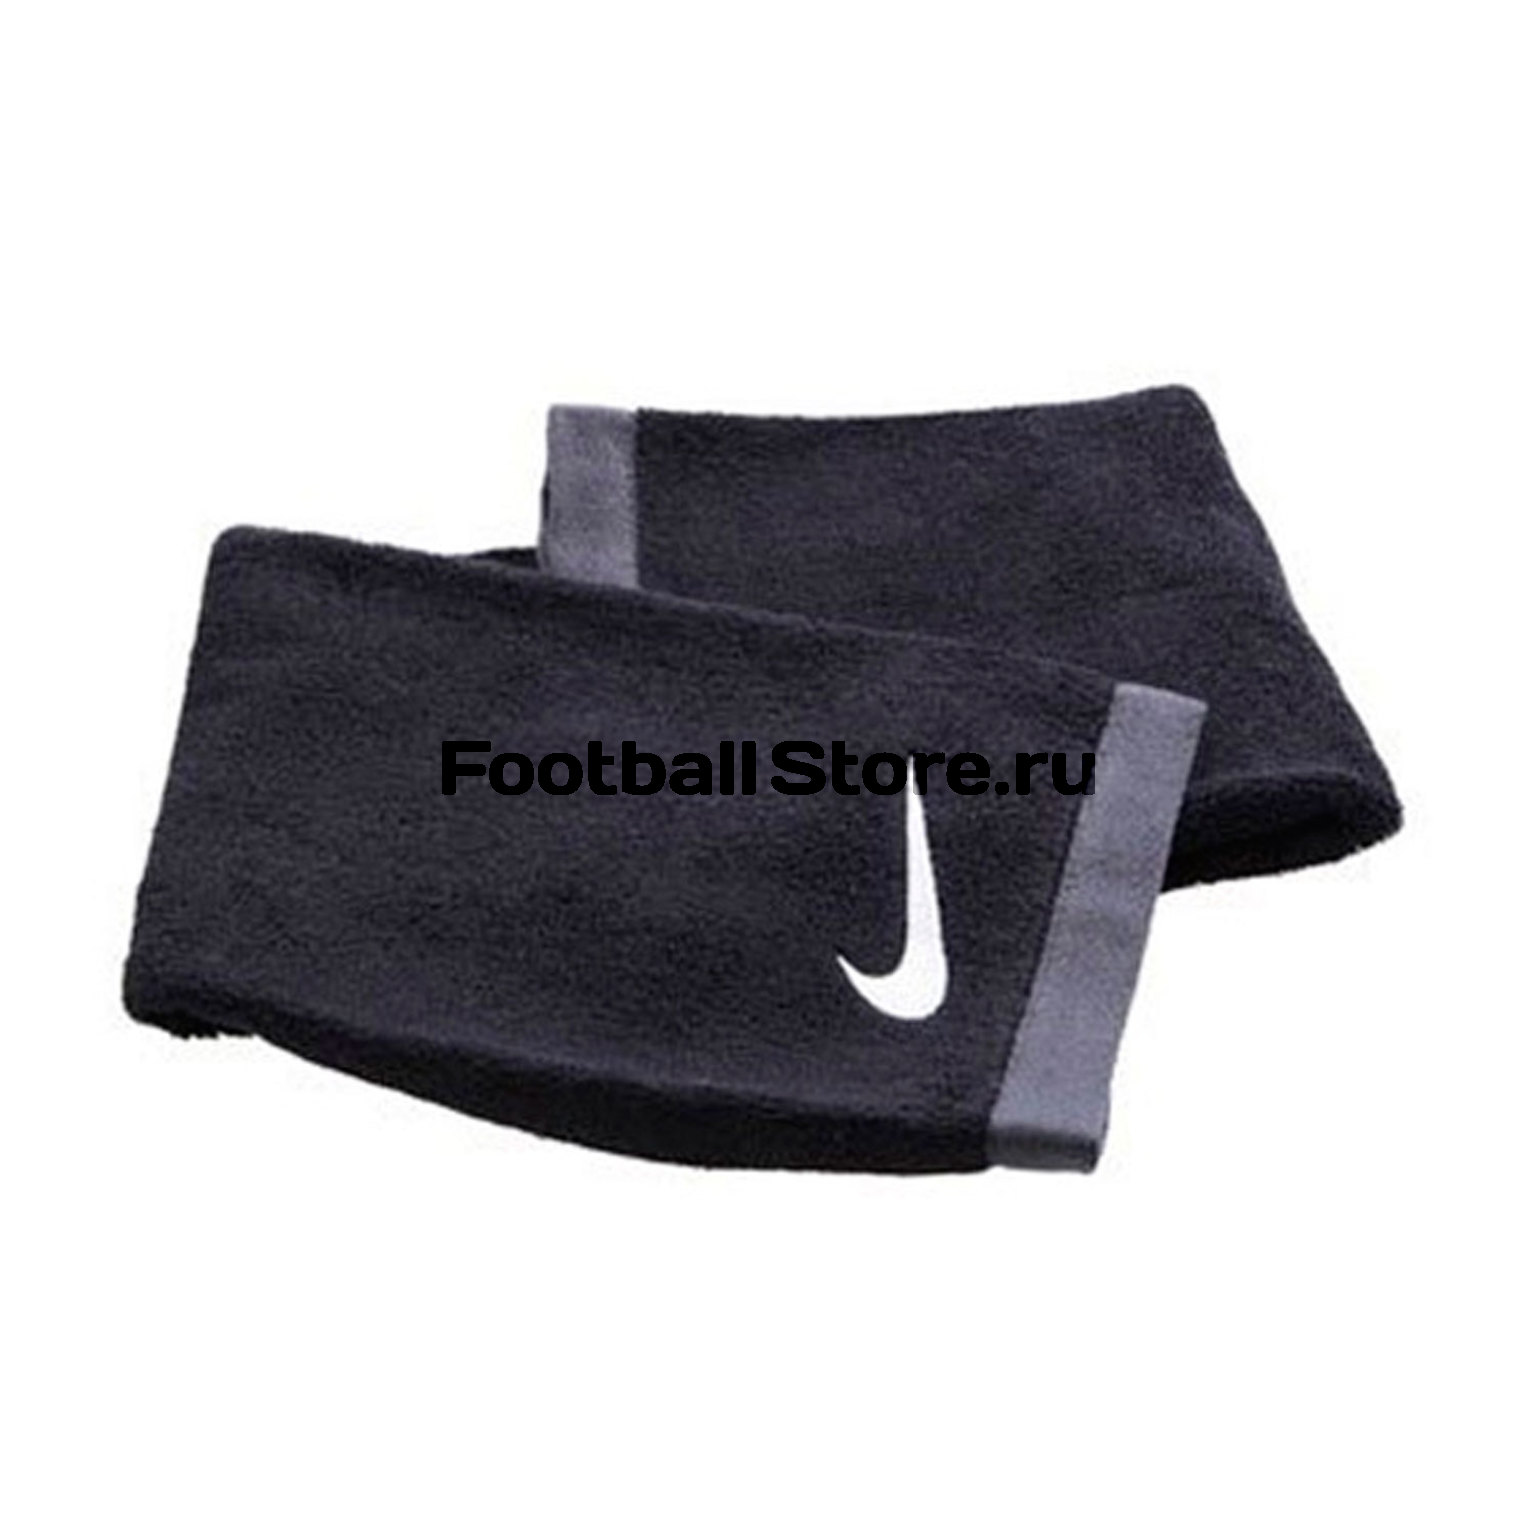 Полотенце Nike Fundamental Towel NET.17.010.LG